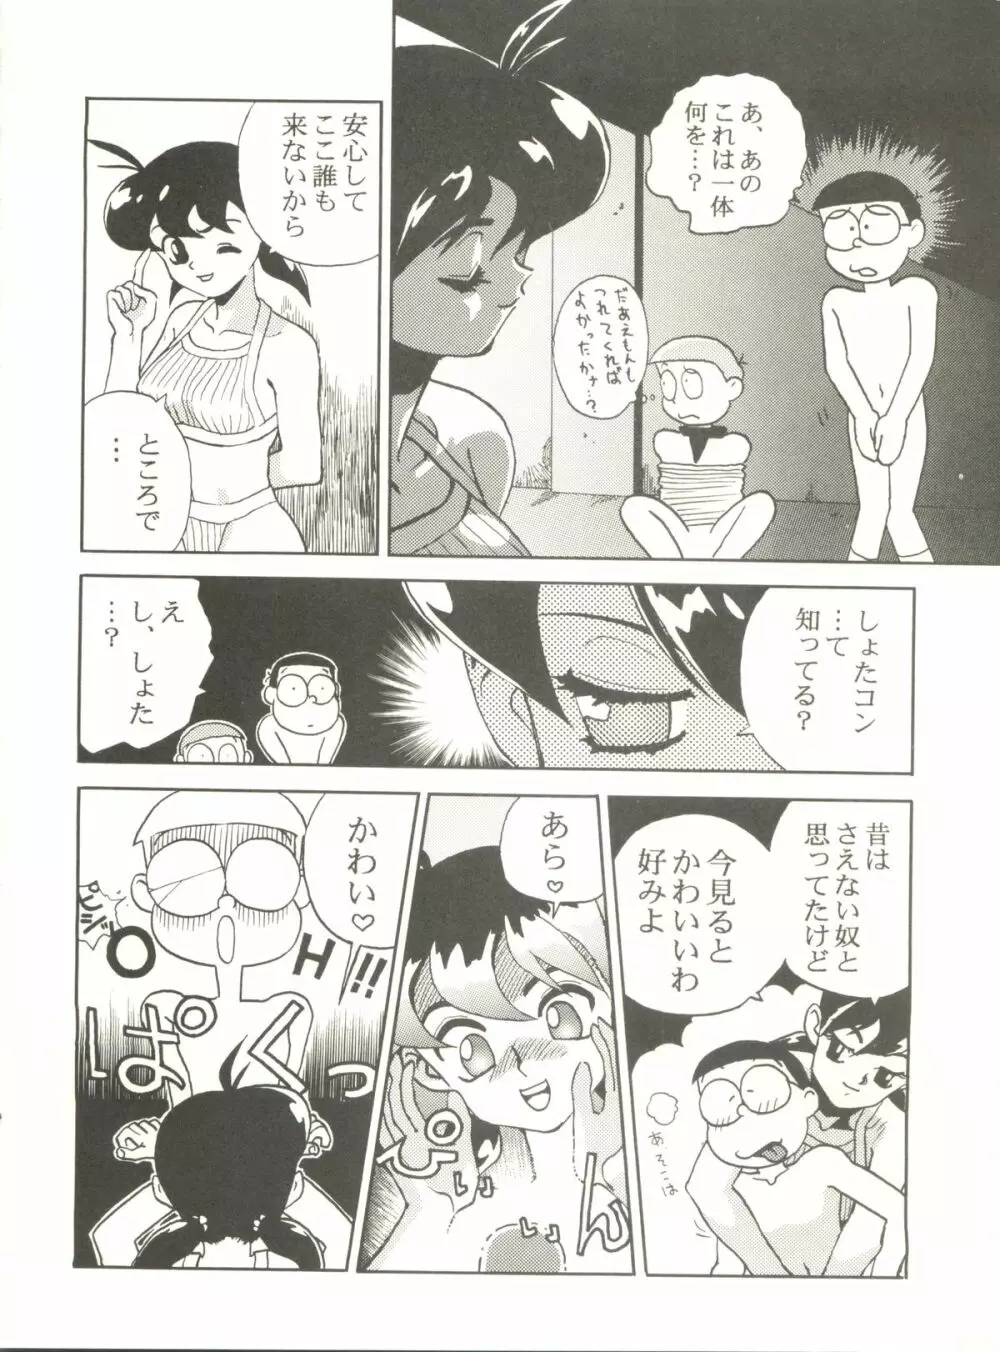 恐悦至極 - page74